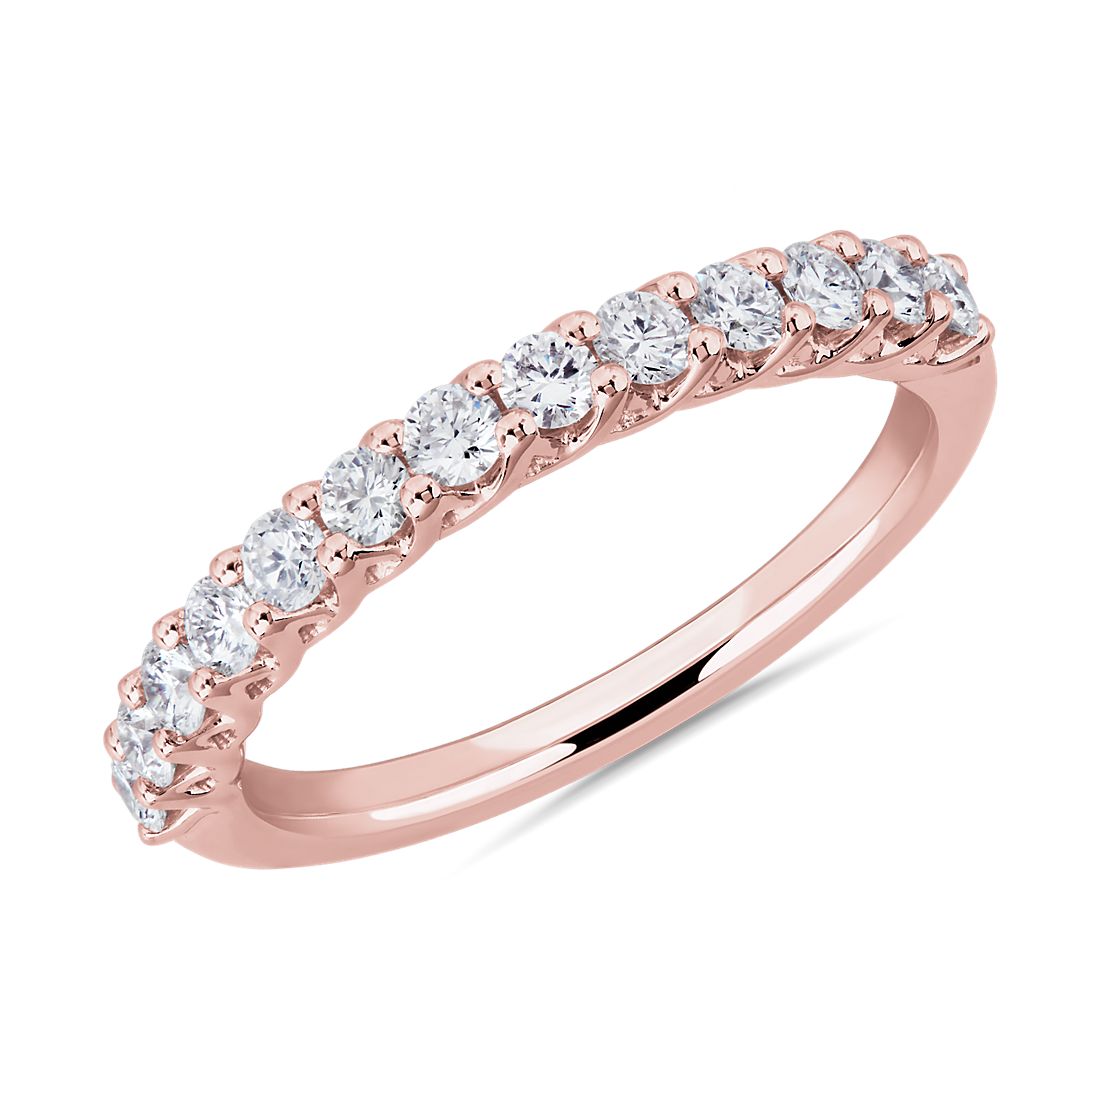 Tessere Diamond Anniversary Ring in 14k Rose Gold (1/2 ct. tw.)